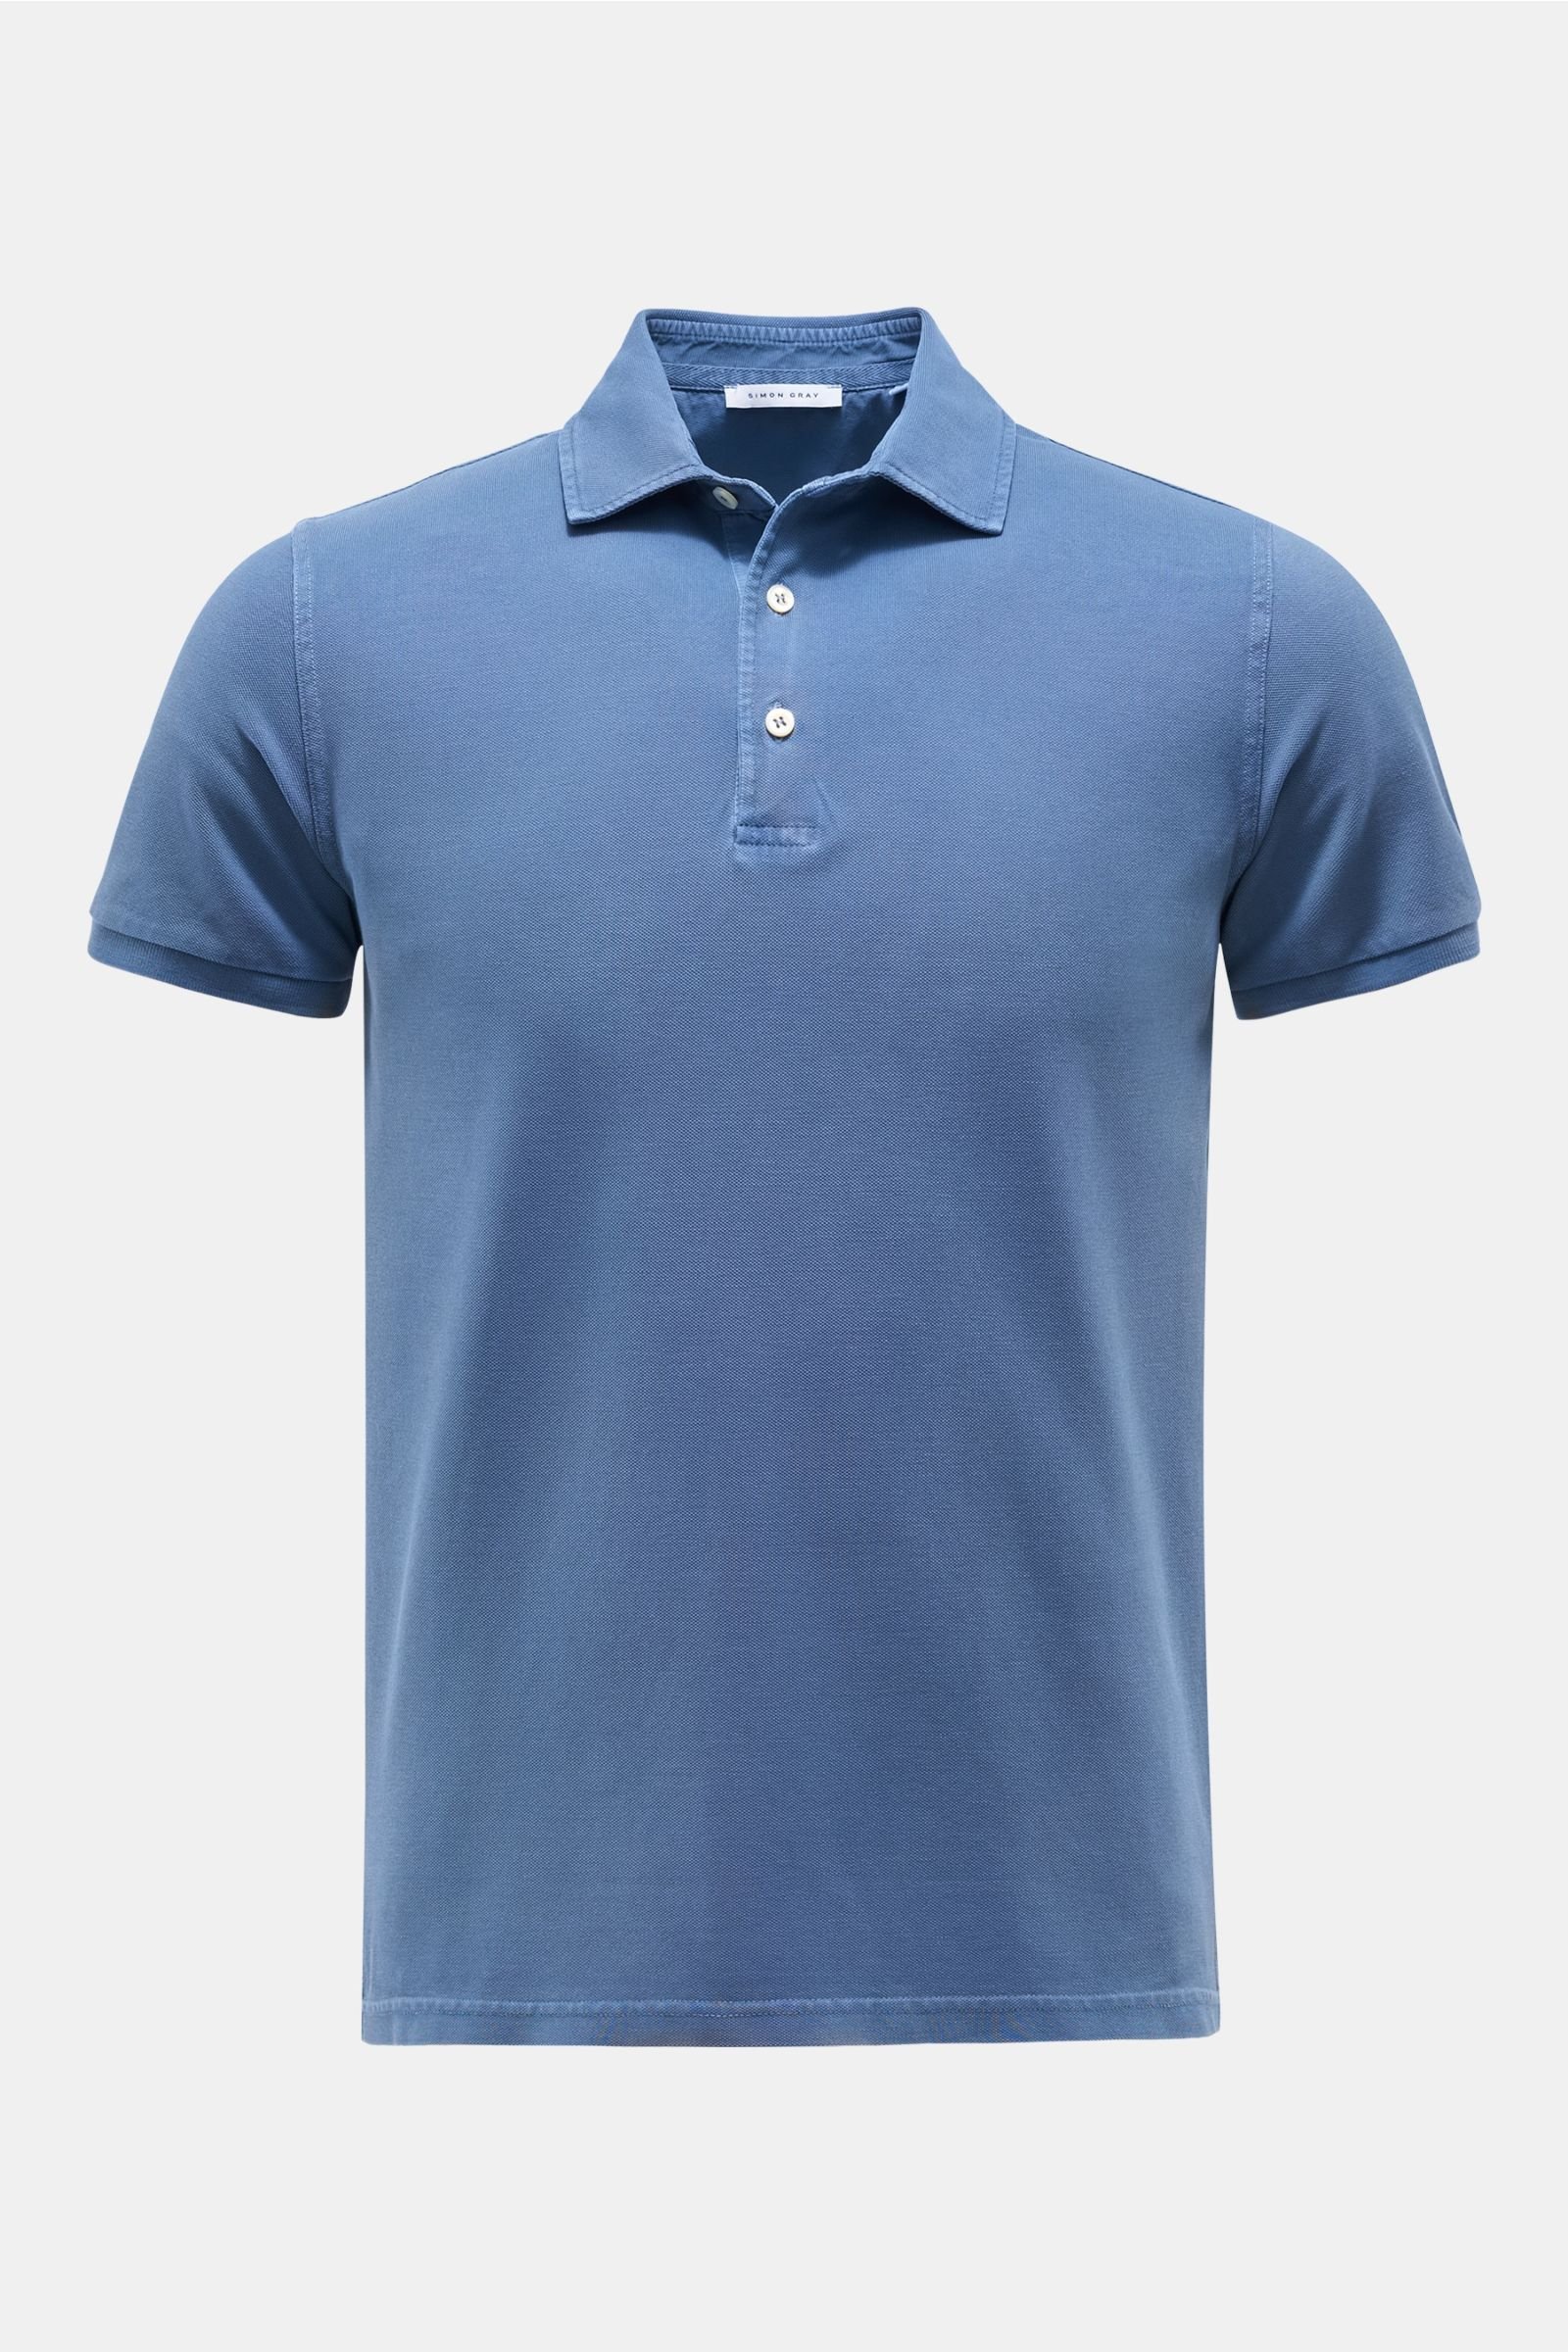 Polo shirt grey-blue